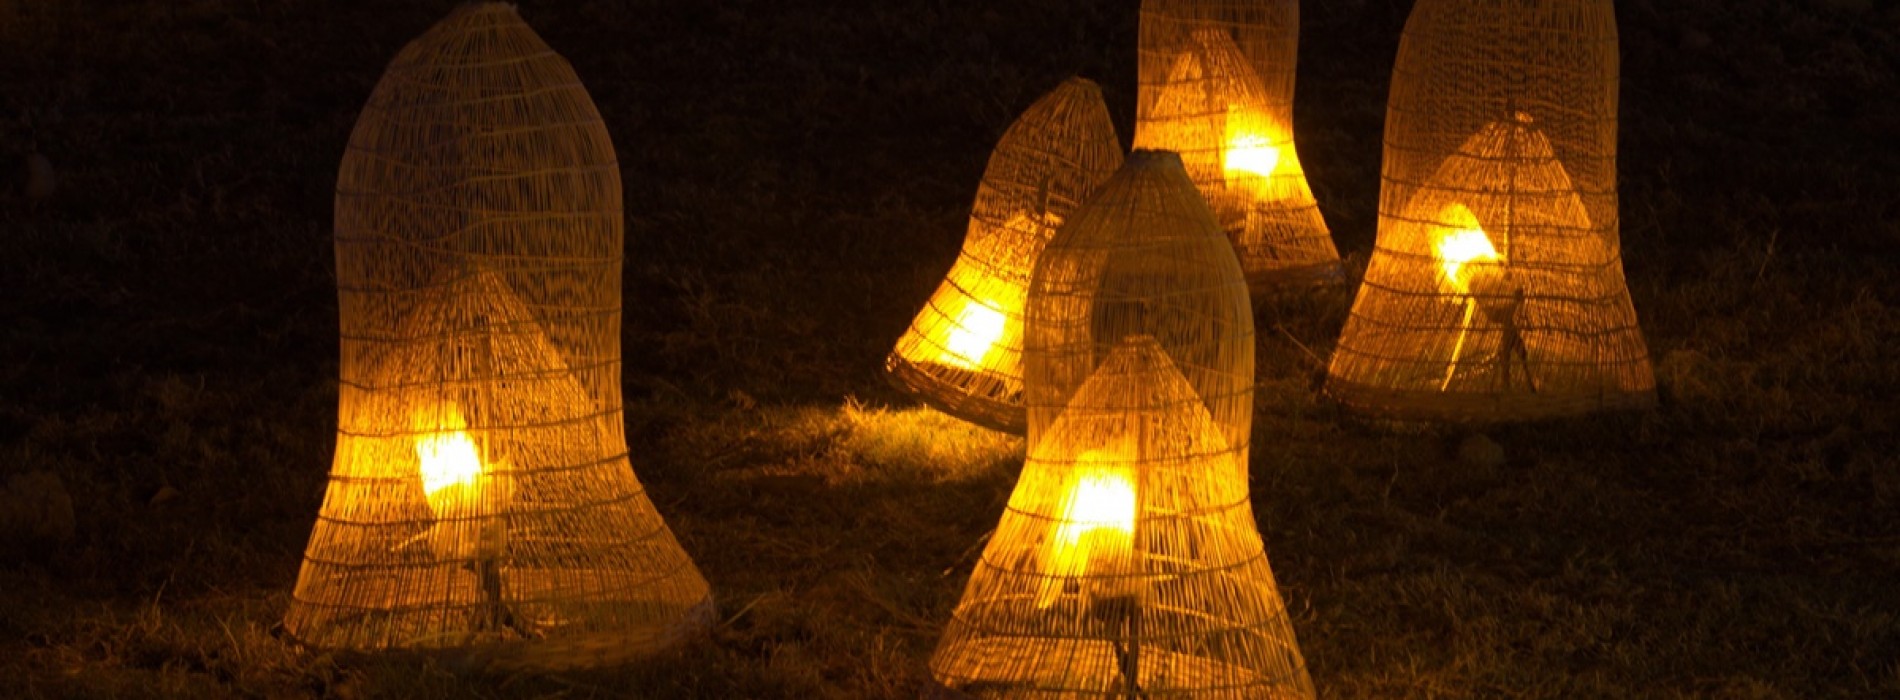 Taiwan celebrates its famous Lantern Festival